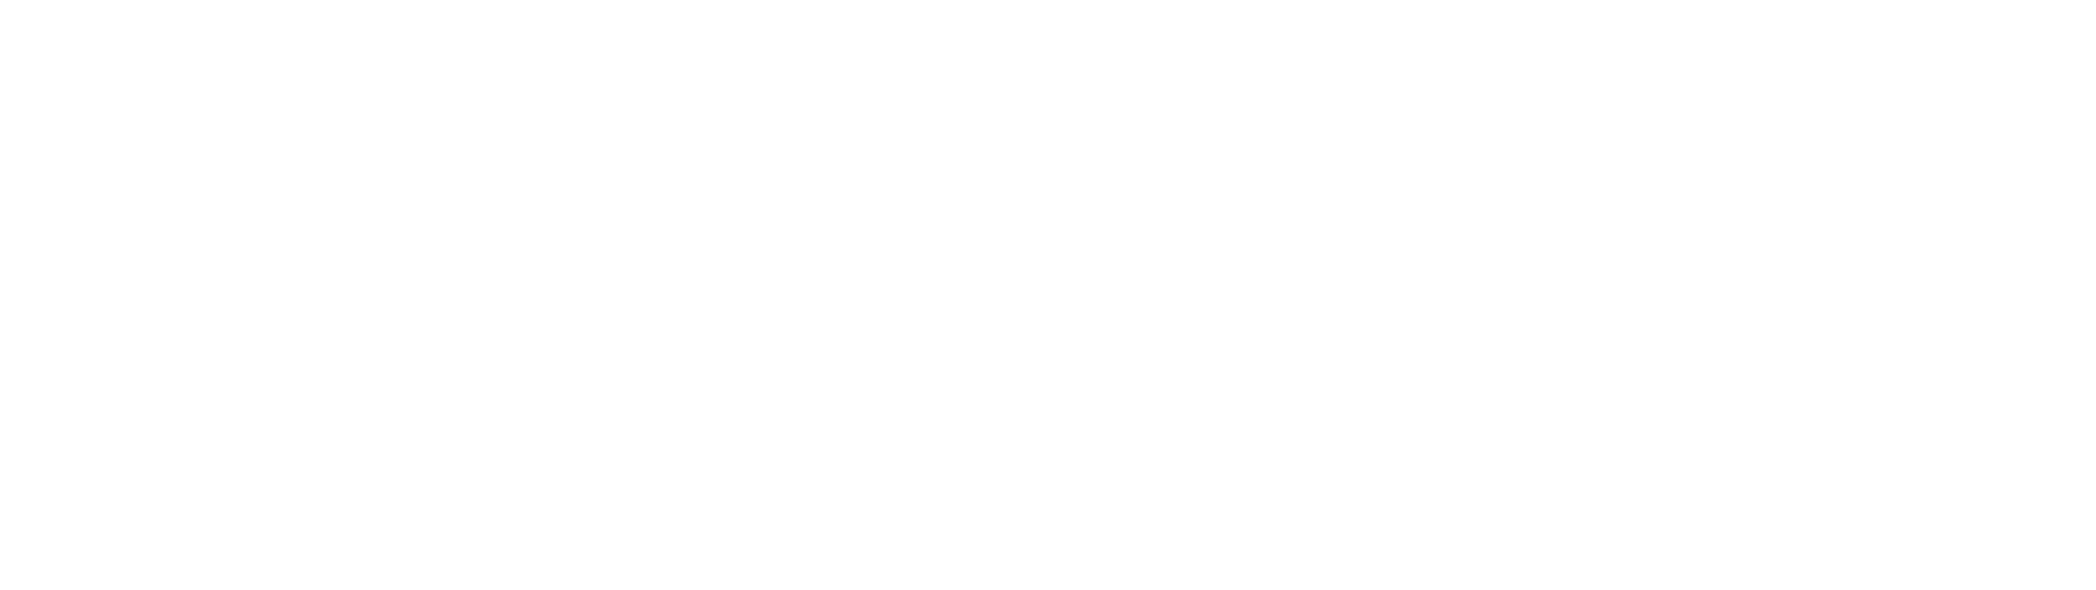 Chattanooga Traffic Network